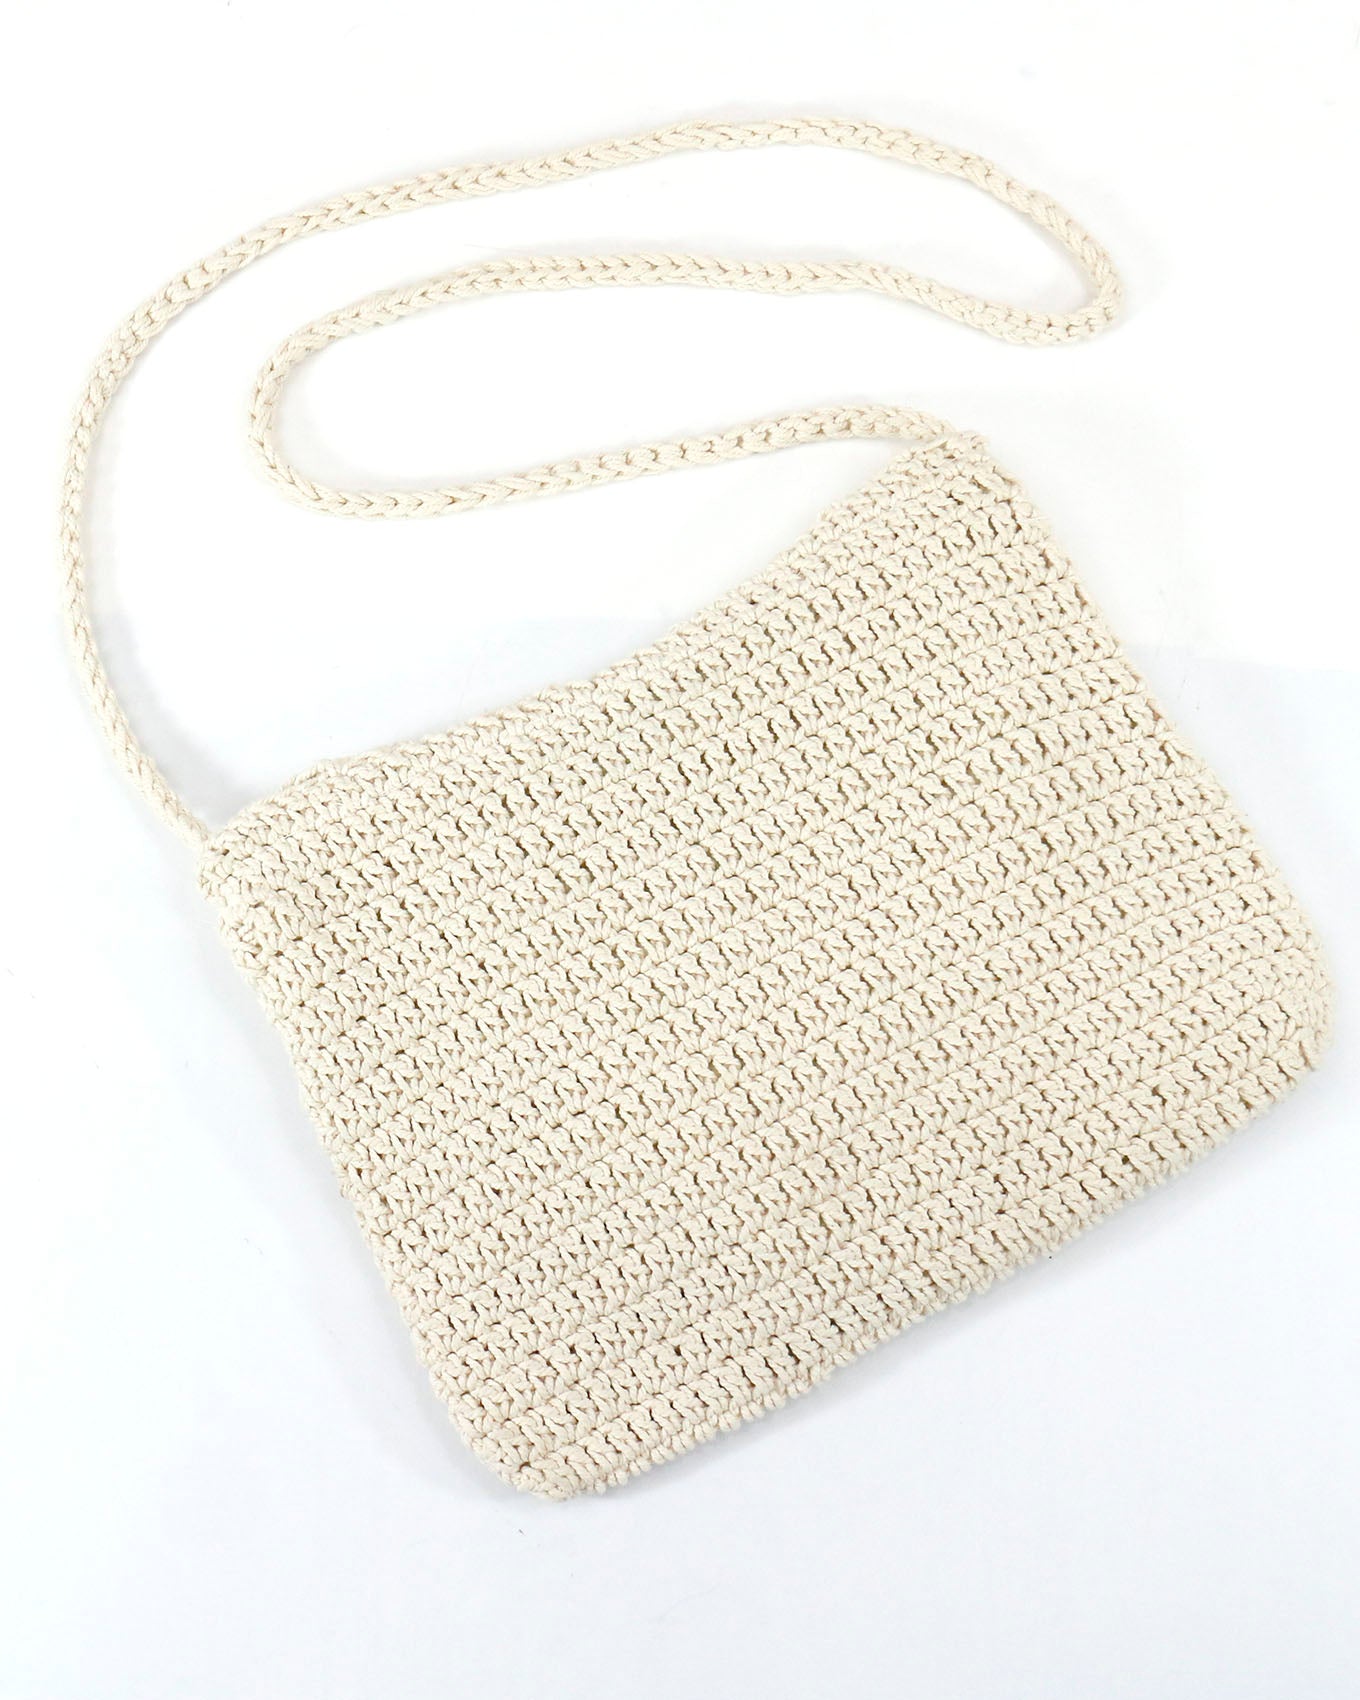 Lacel Urwebin Top Handle Bags for Women Fahsionable Designer Crossbody Purse Large Cute Satchel Handbag